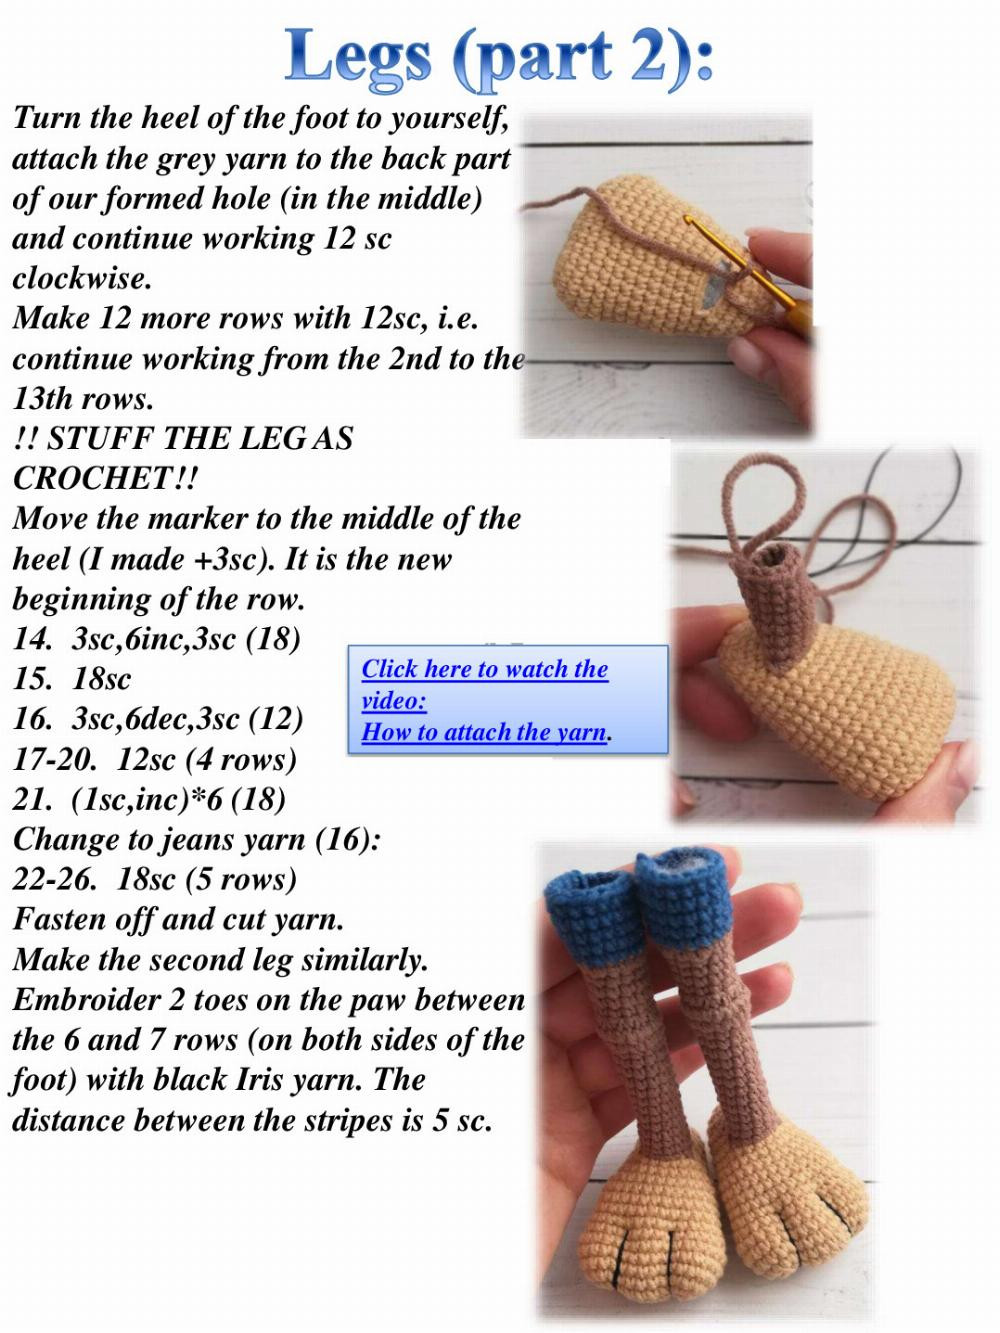 crochet pattern mackey monkey